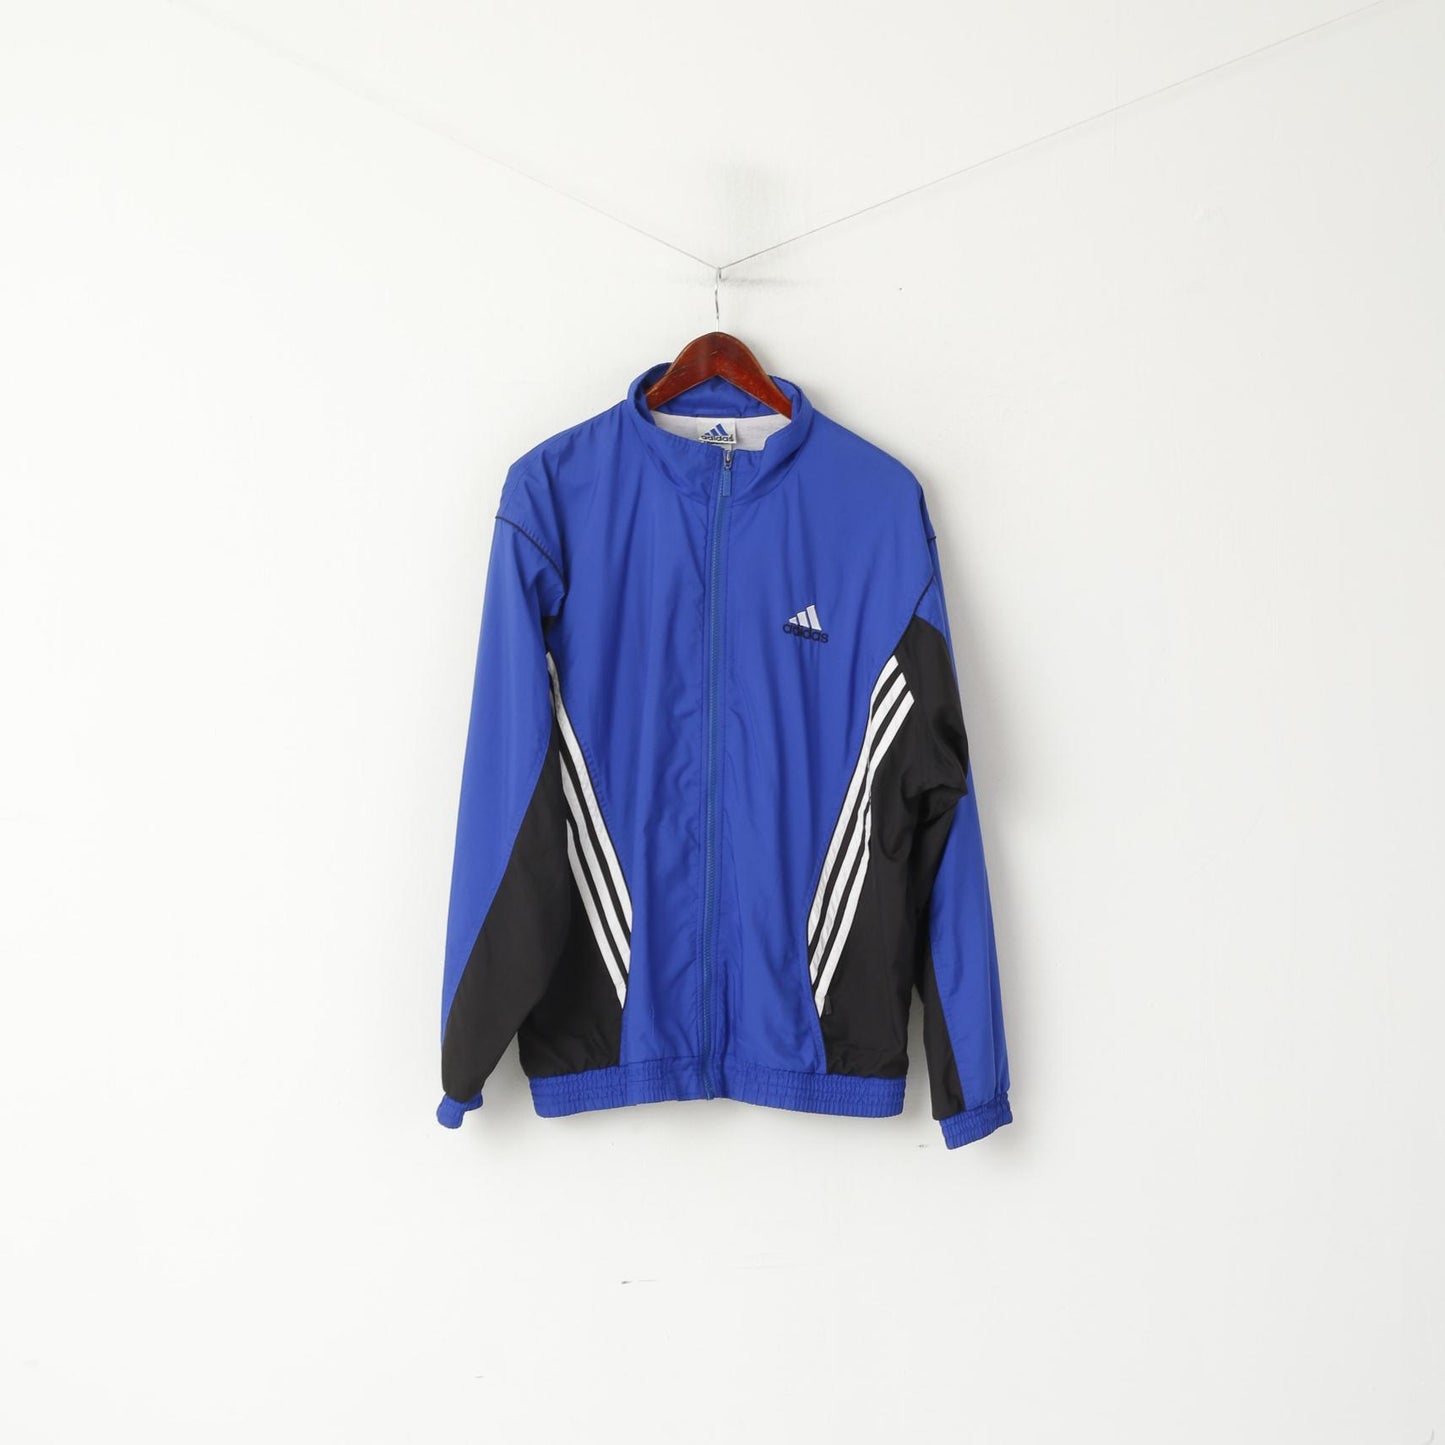 Adidas Men L 186 Jacket Blue Vintage Zip Up Bomber Active '00 Sportswear Top